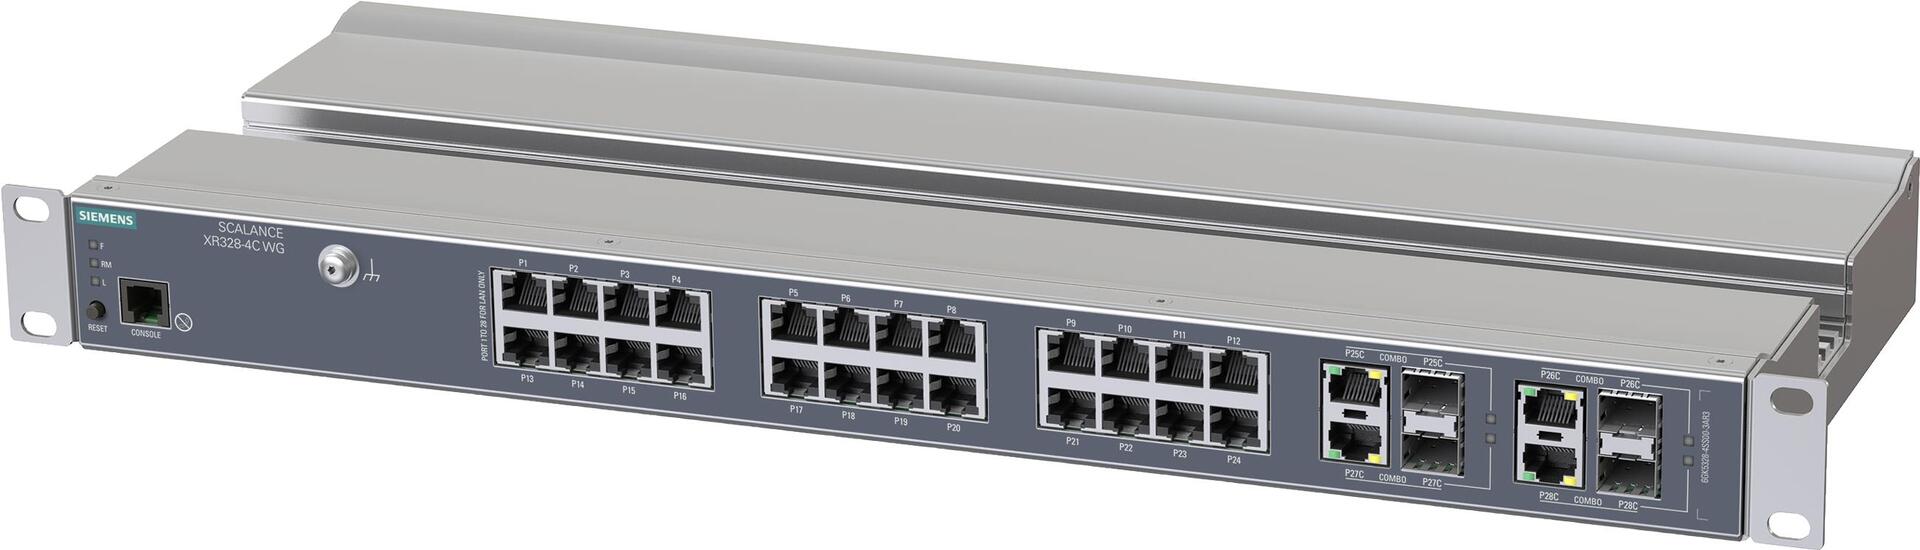 Siemens Industrial Ethernet Switch, RJ45-Anschlüsse 28, Glasfaseranschlüsse 4SFP, 1Gbps, Managed (6GK5328-4SS00-3AR3)